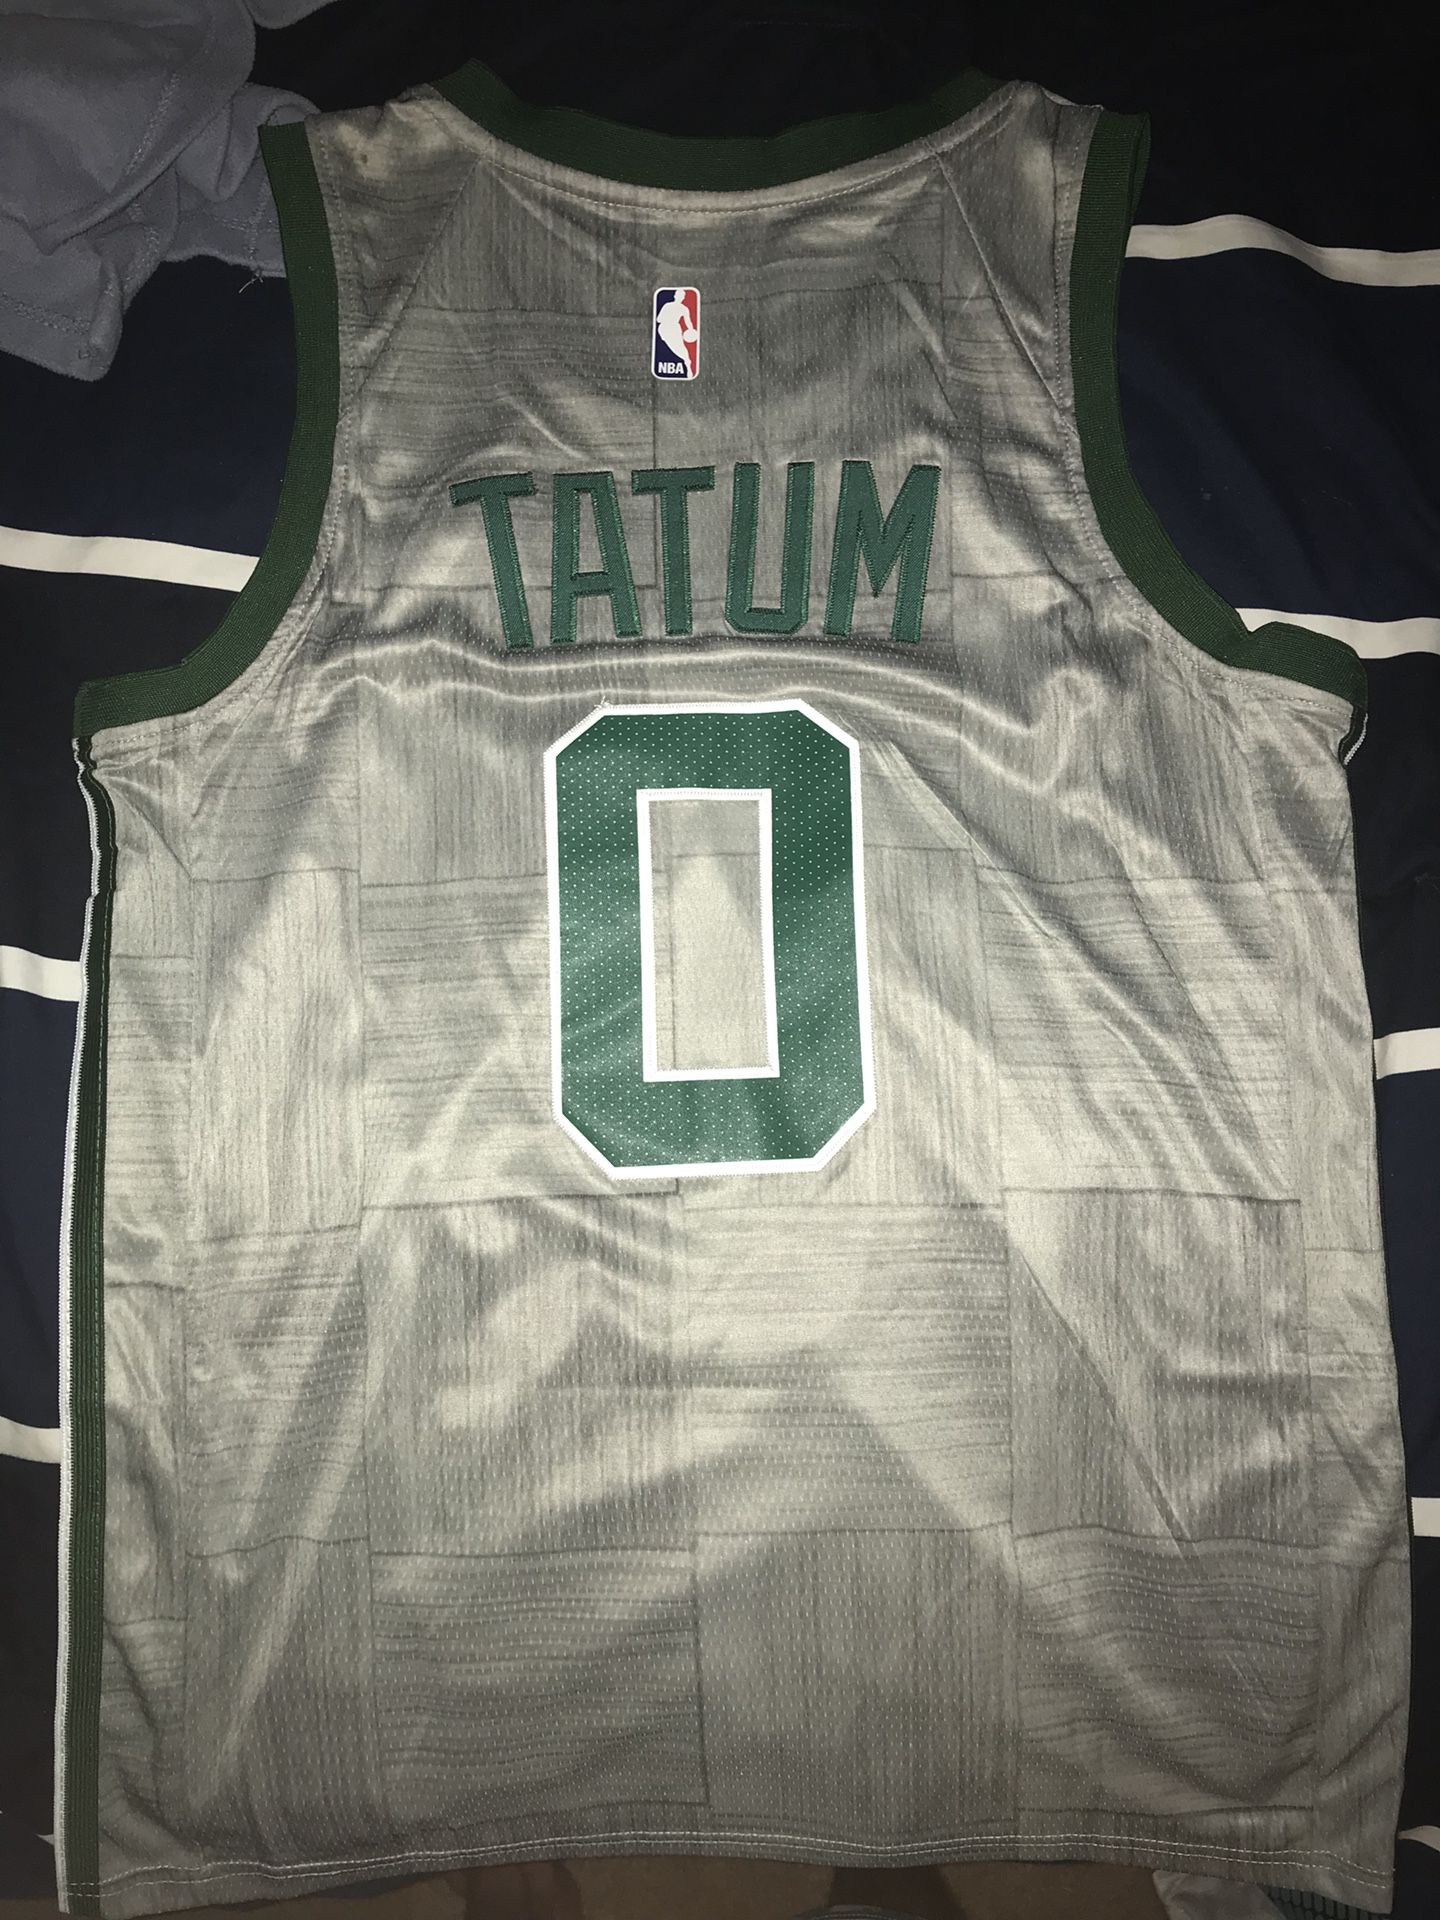 City Edition Jayson Tatum Stitched Jersey for Sale in Warren, RI - OfferUp